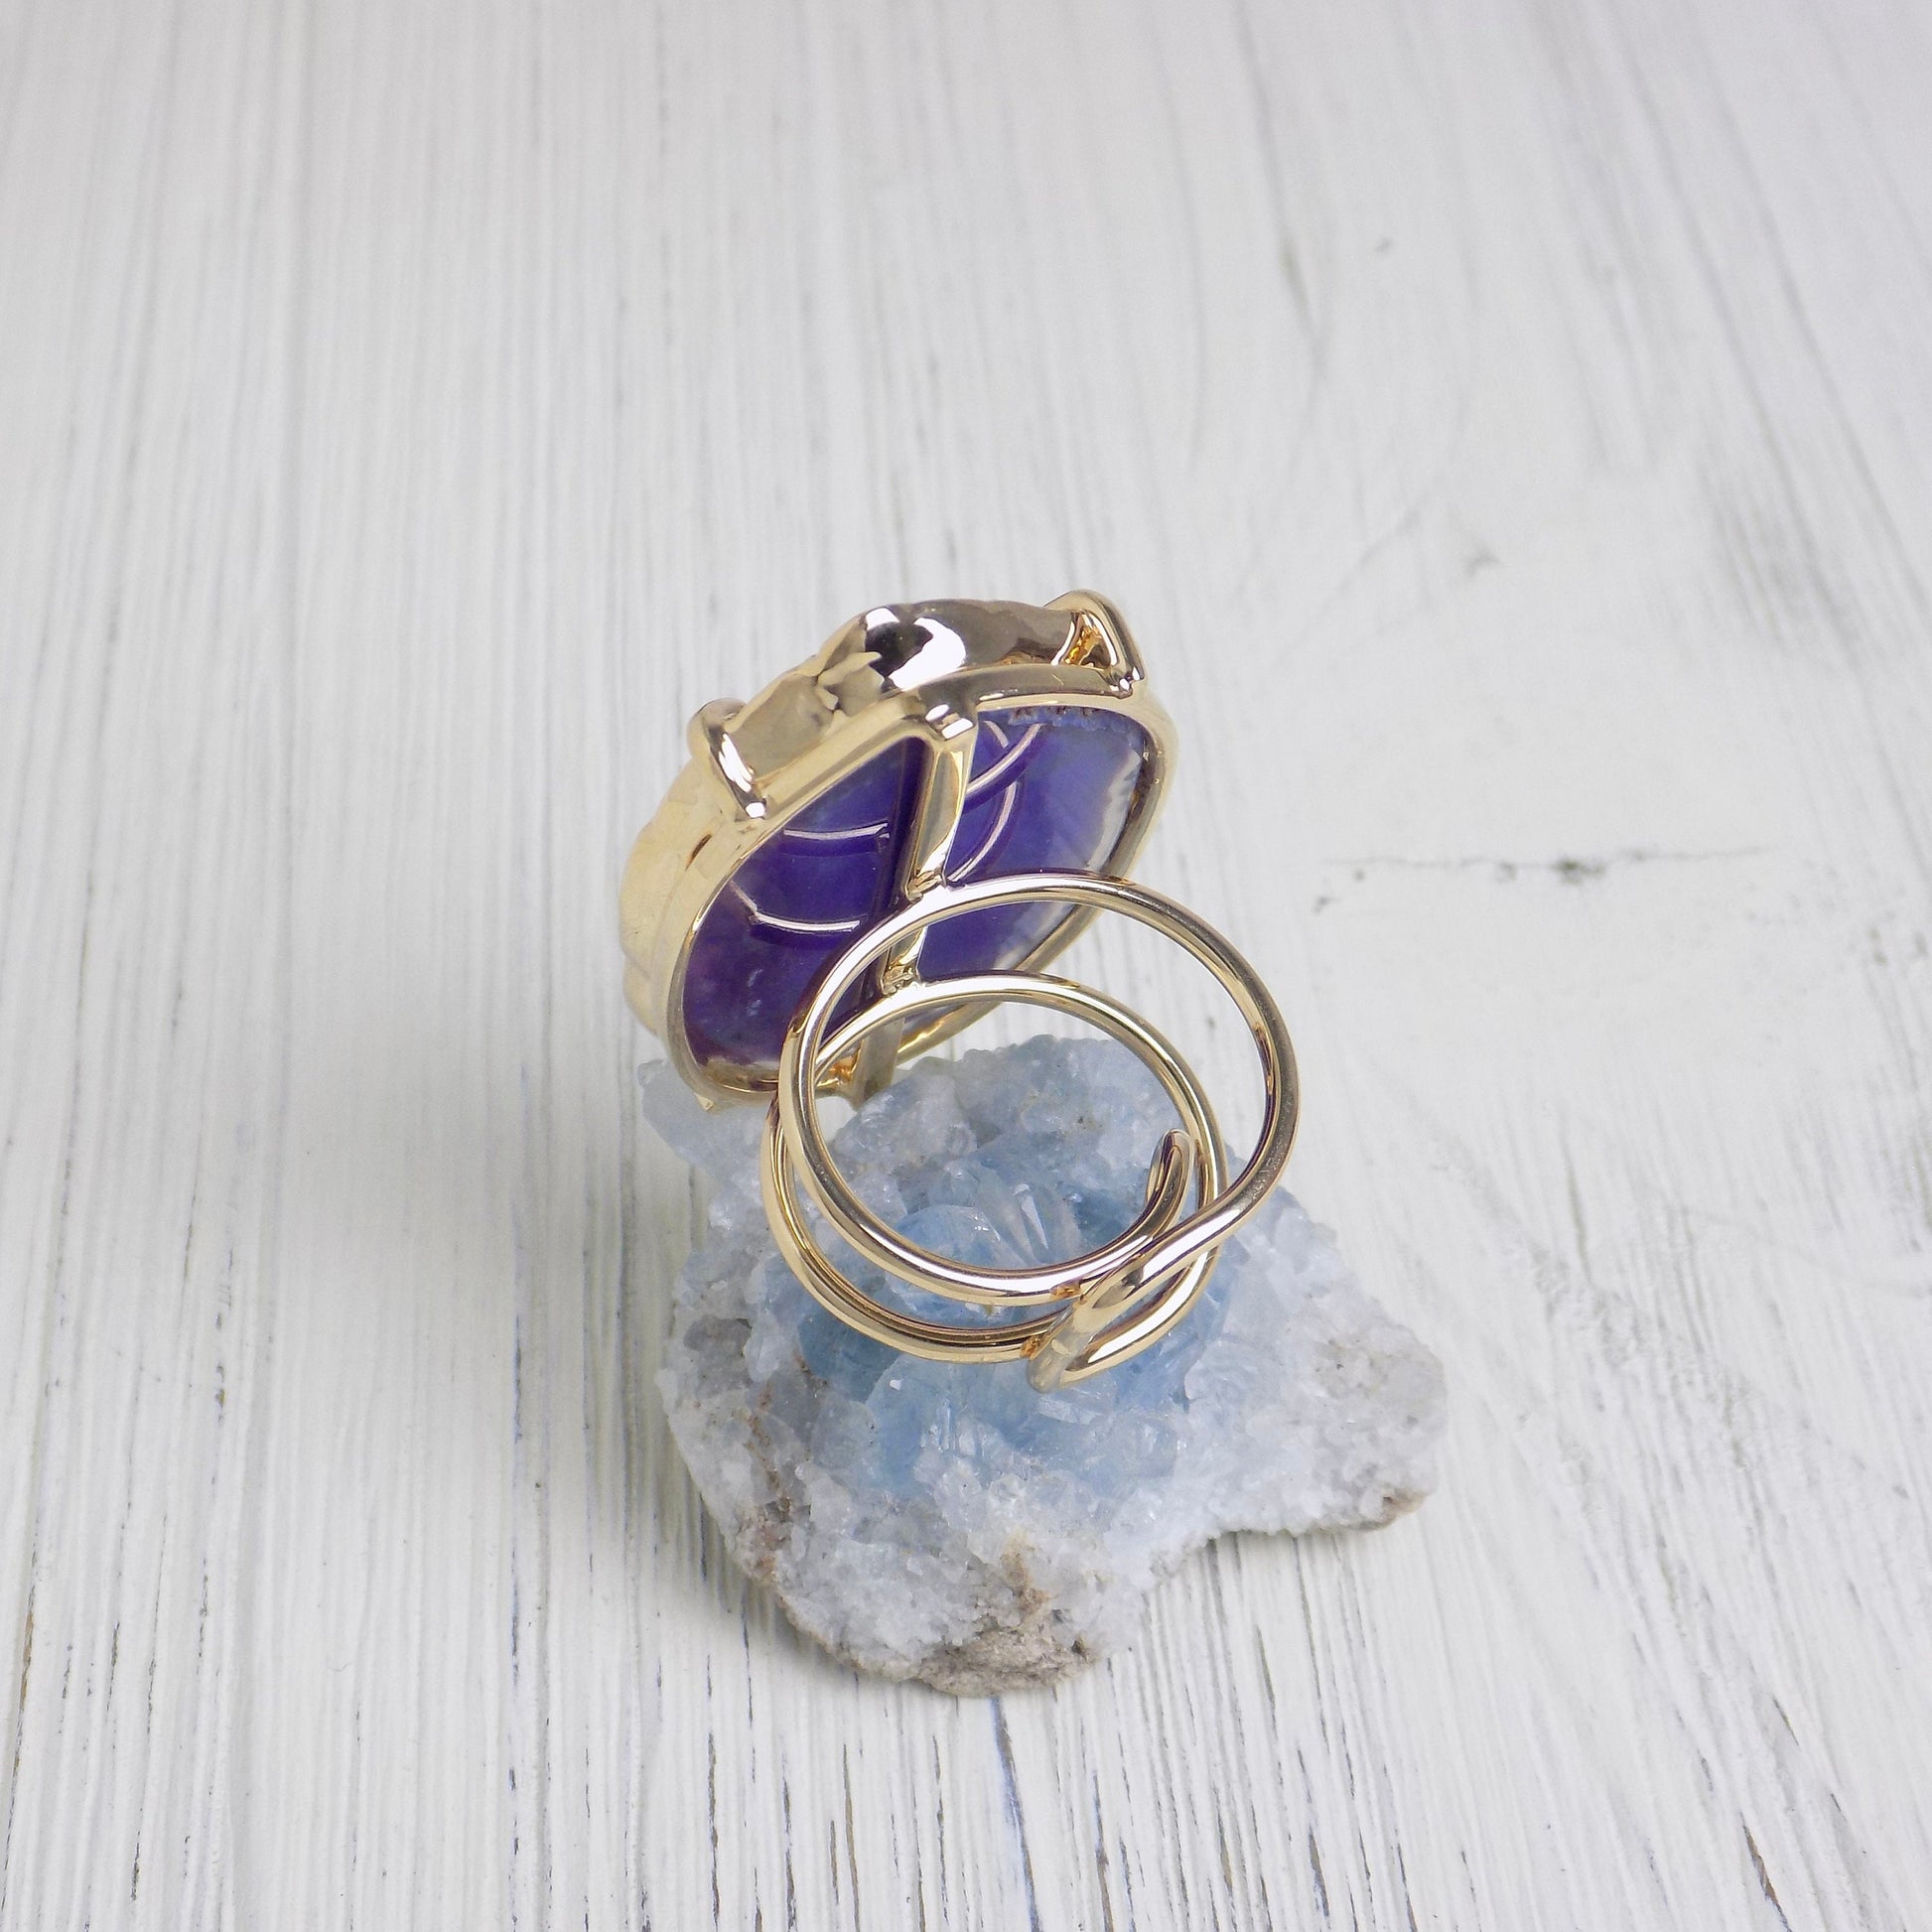 Boho Purple Agate Ring, Geode Ring, Statement Ring, Statement Jewelry Slice Agate Ring Large Stone Ring Crystal Ring Gold Adjustable G14-197